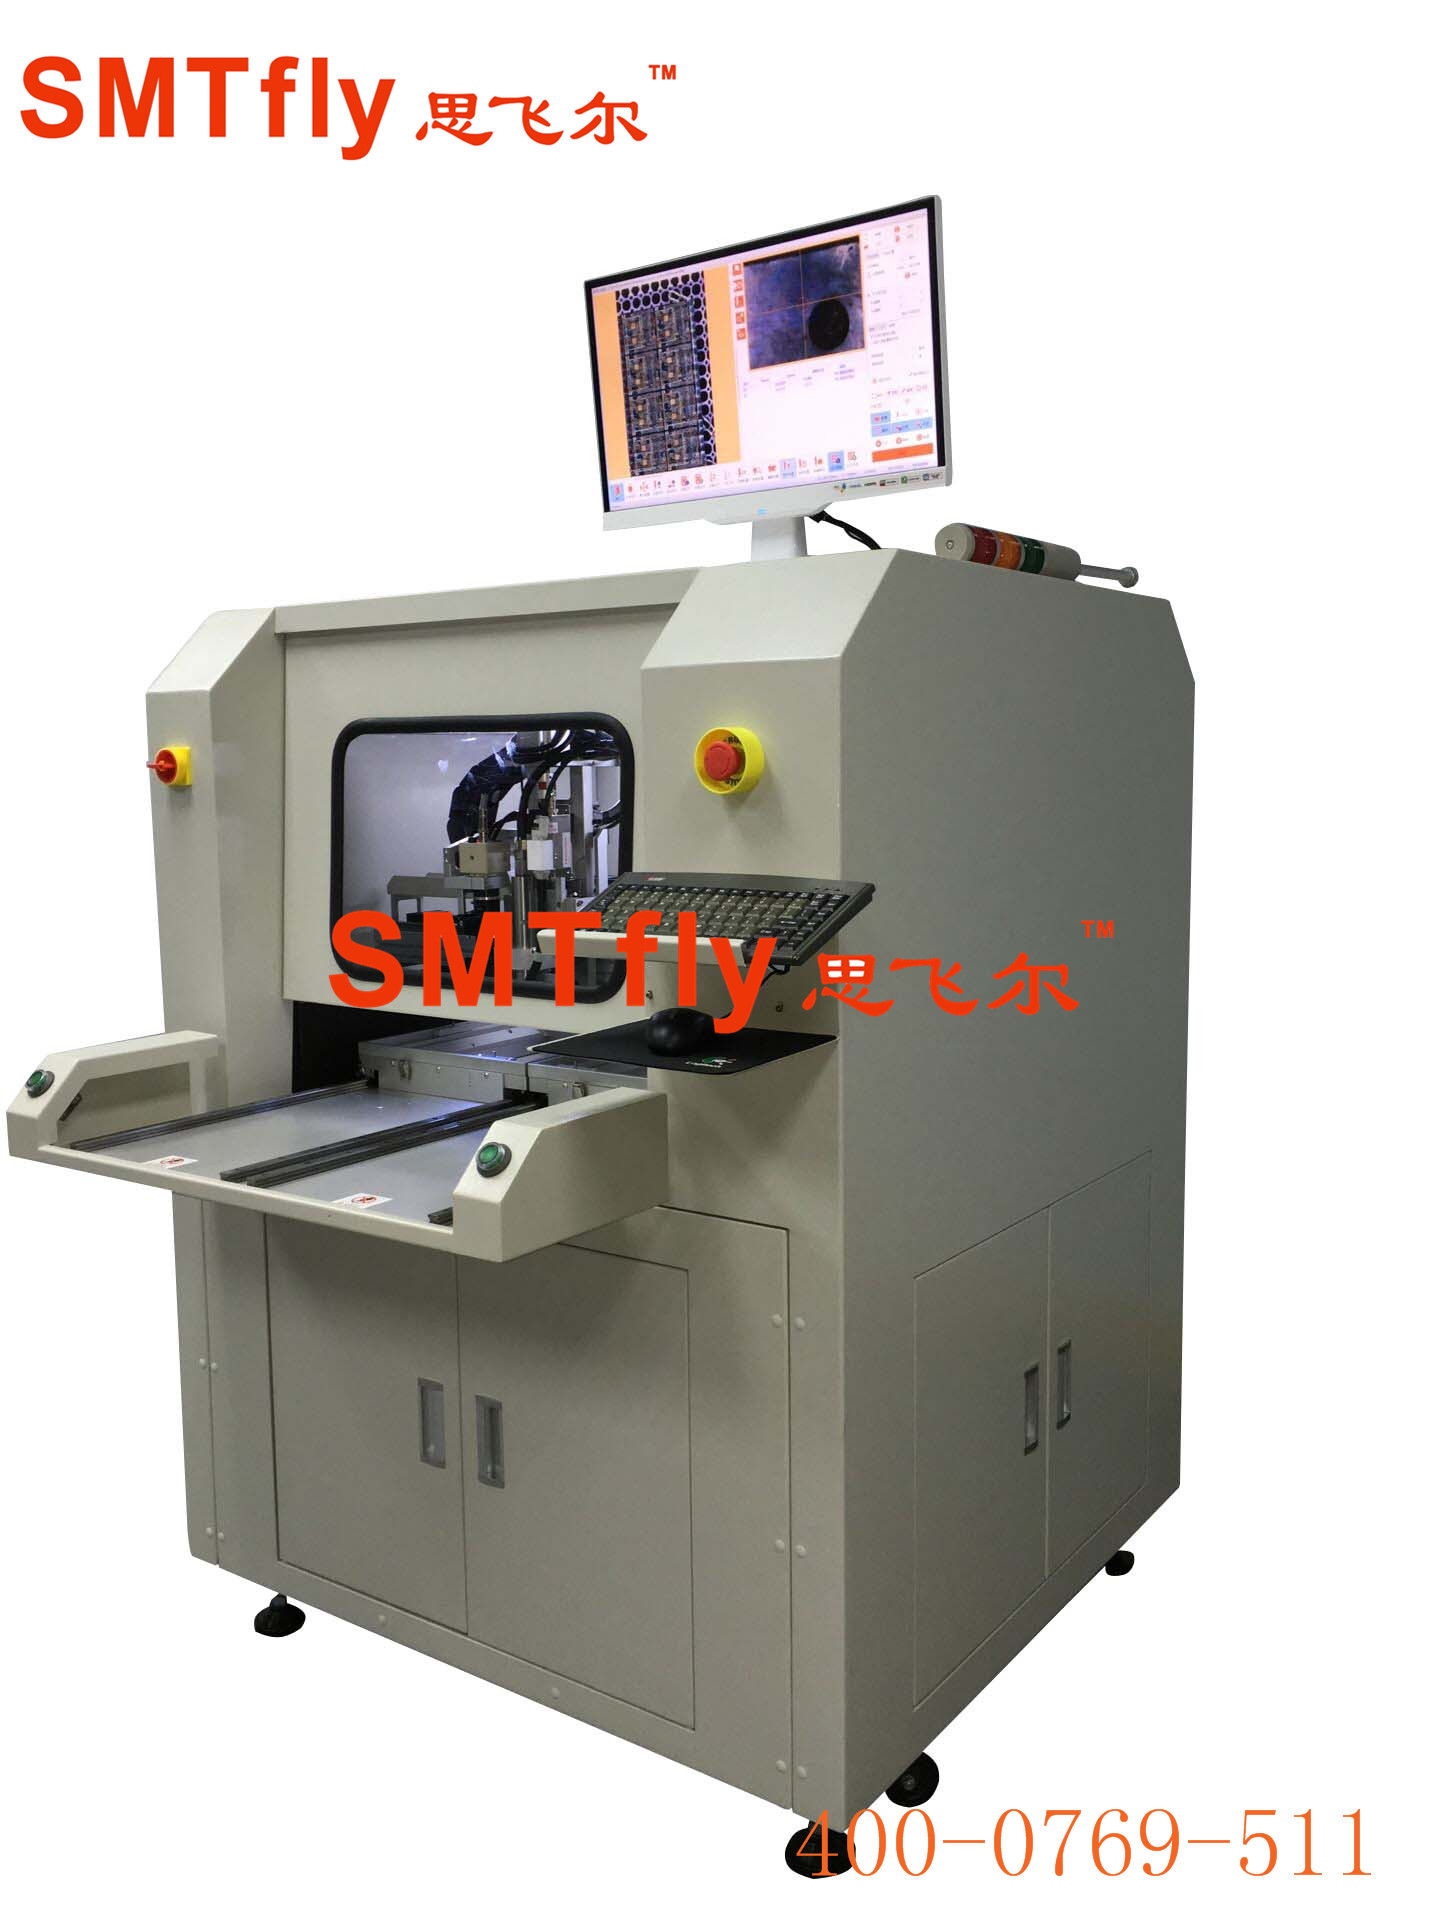 PCB Routing Equipment,SMTfly-F01-S